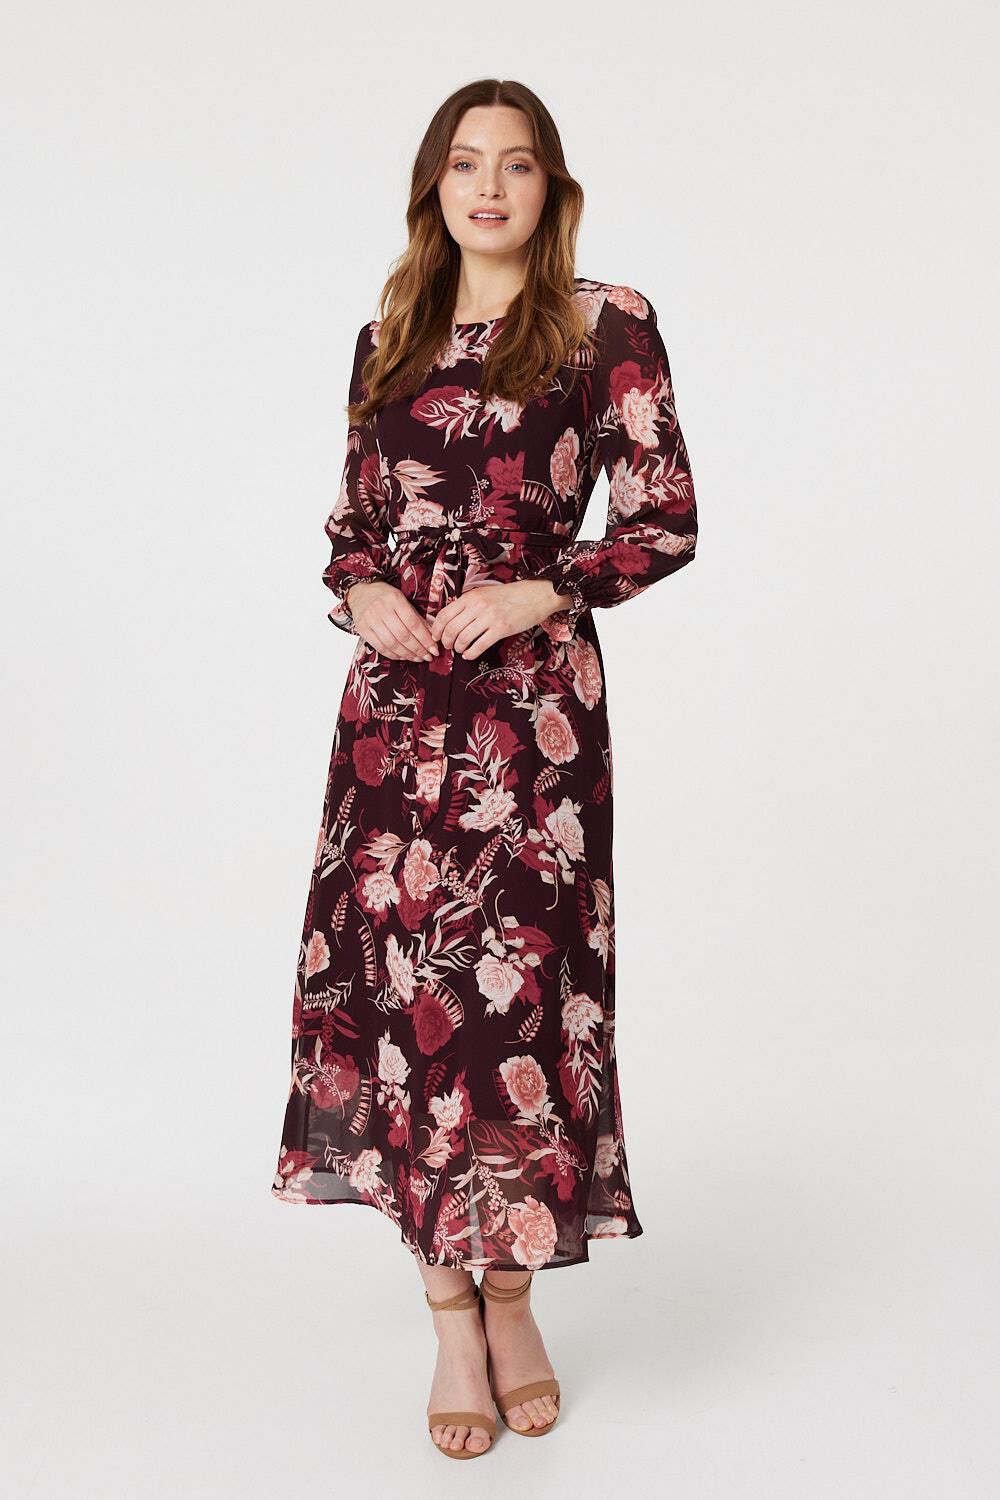 Izabel London Burgundy - Floral Long Sleeve A-Line Dress, Size: 12